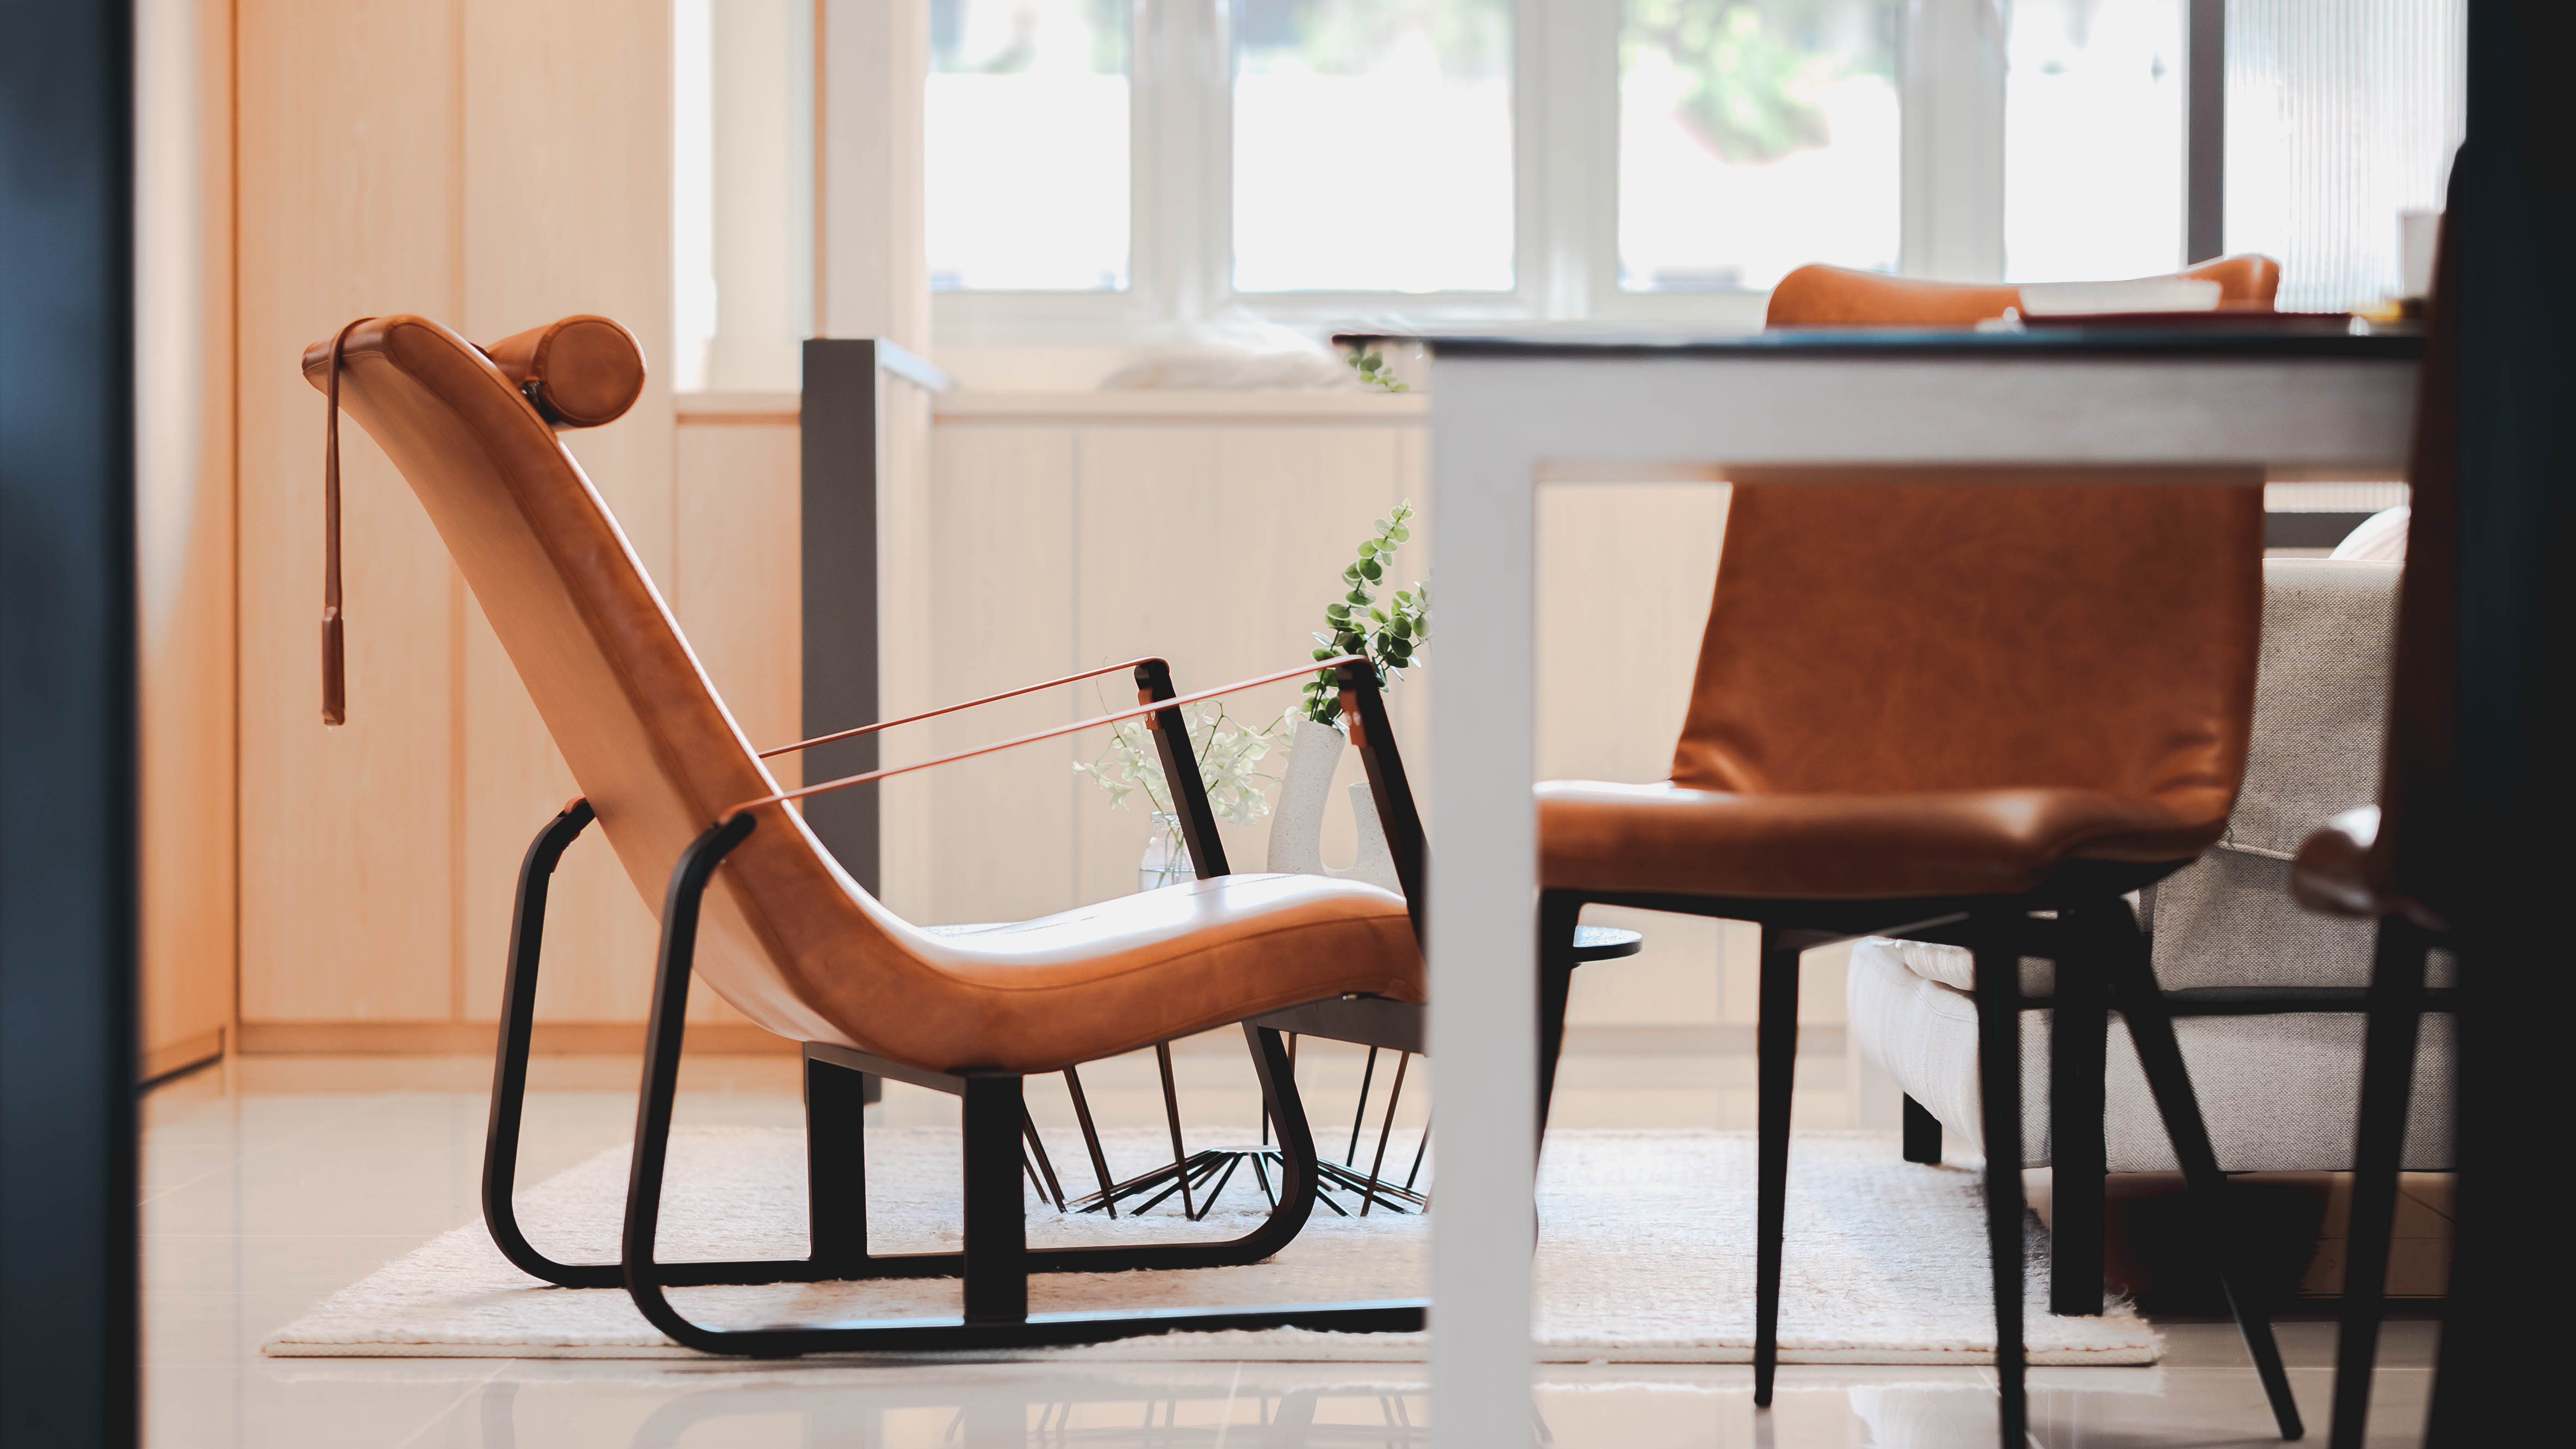 Minimalist, Modern Design - Living Room - HDB 4 Room - Design by Starry Homestead Pte Ltd